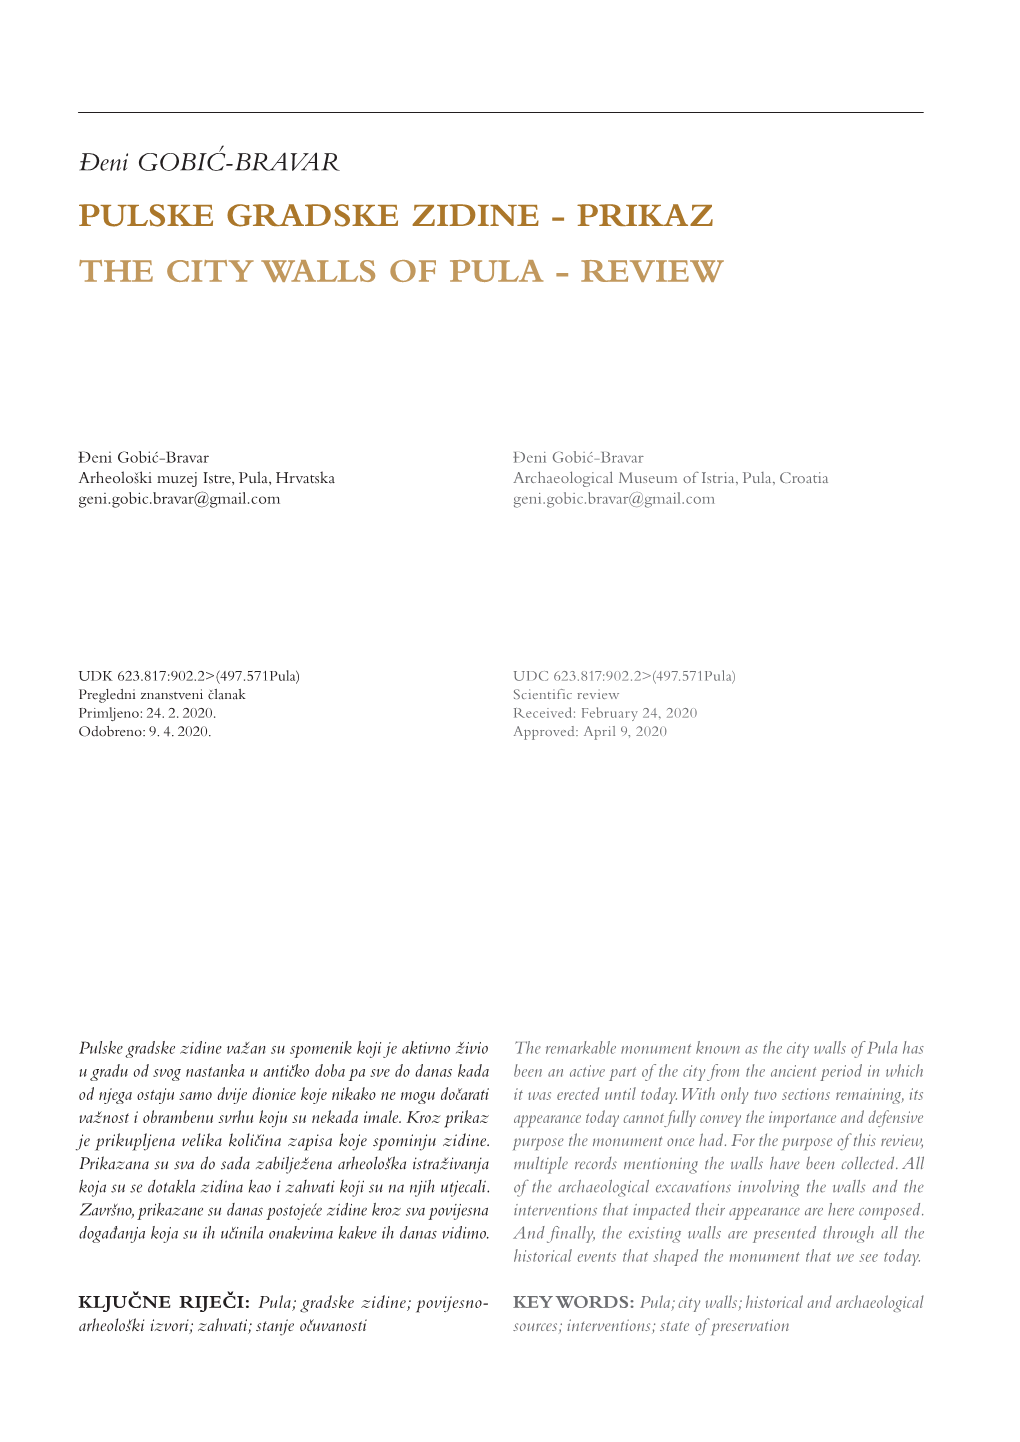 Pulske Gradske Zidine - Prikaz the City Walls of Pula - Review